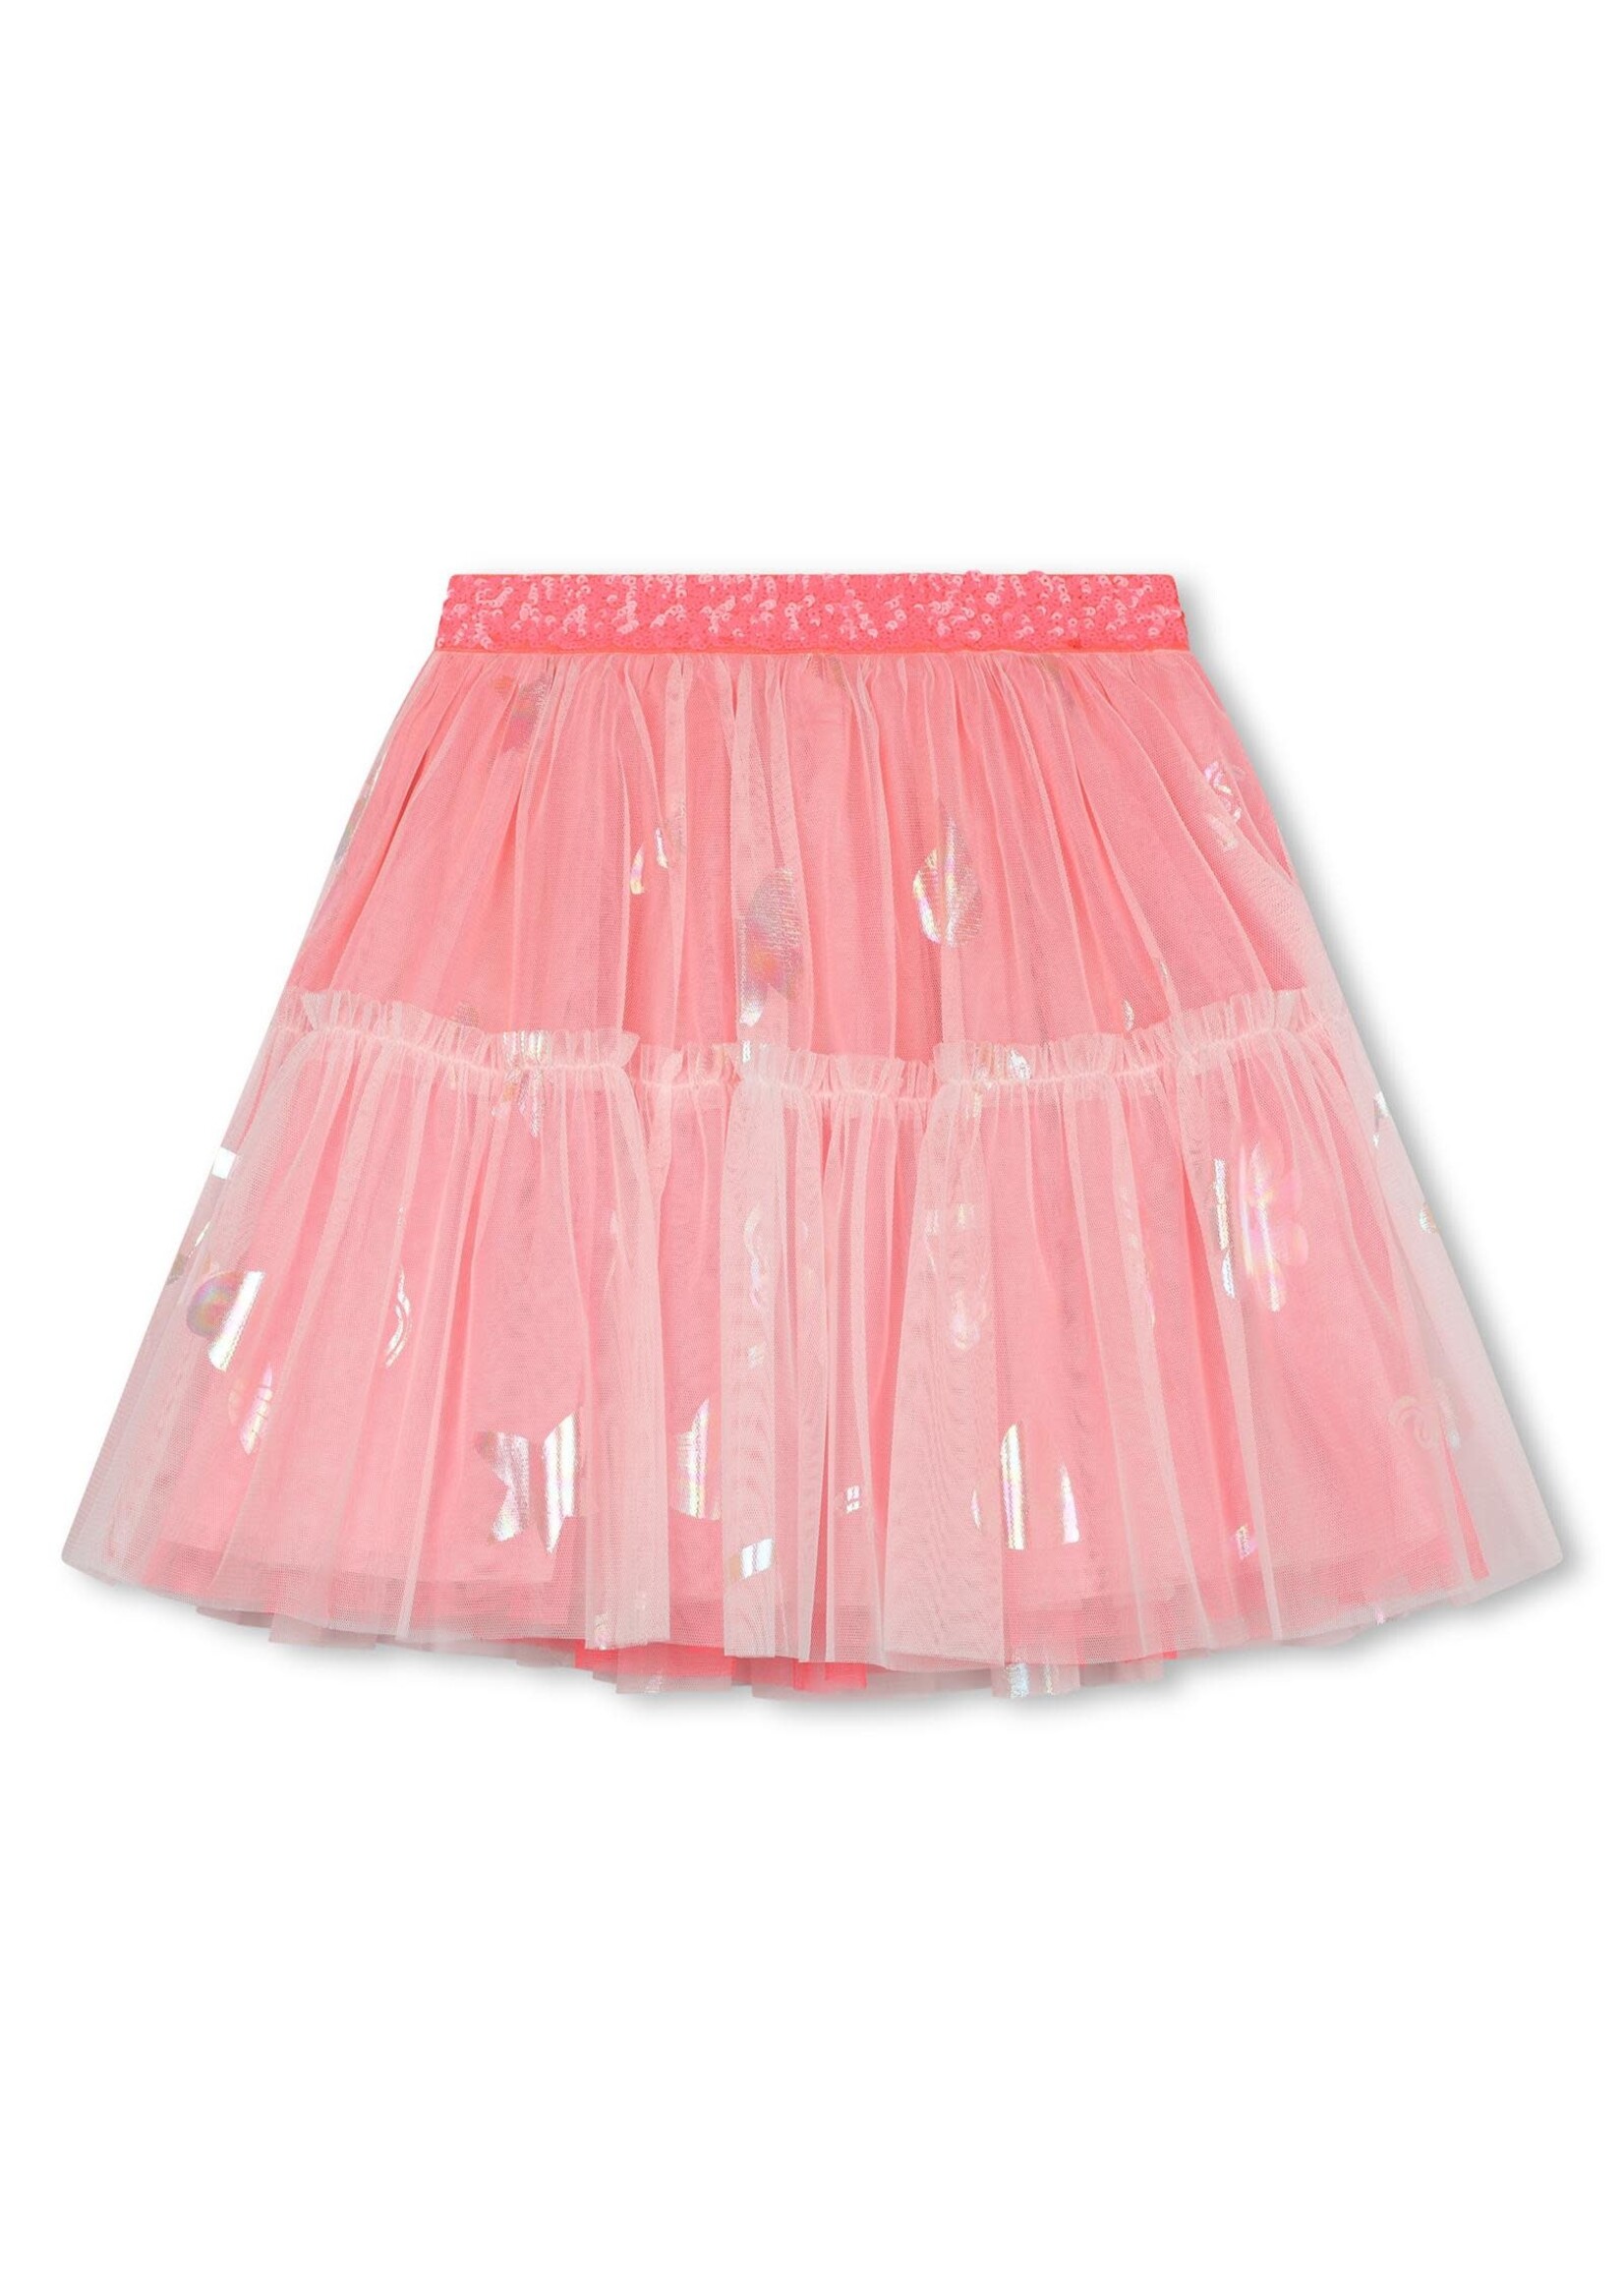 Billie Blush Skirt Glitter Pink - Billie Blush